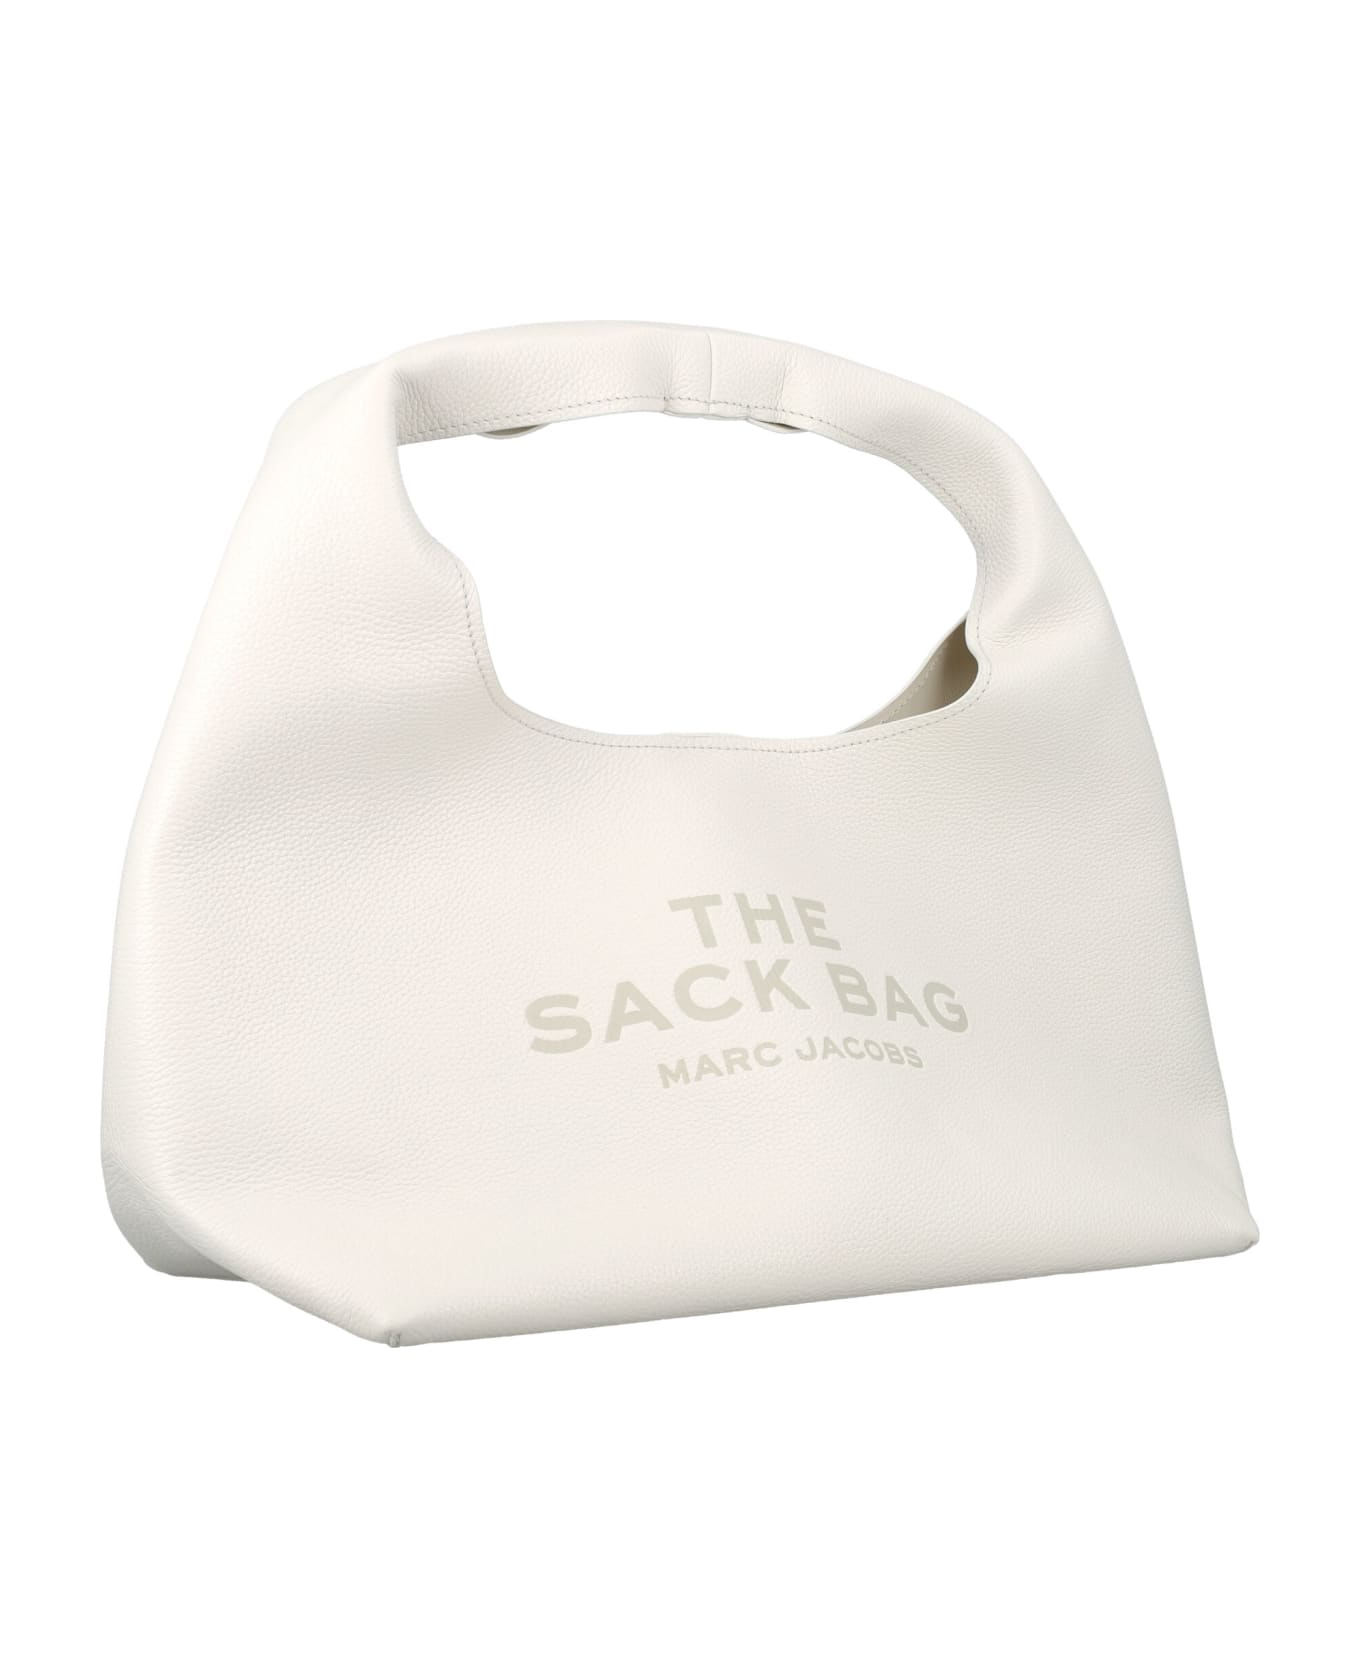 Marc Jacobs The Sack Bag - WHITE